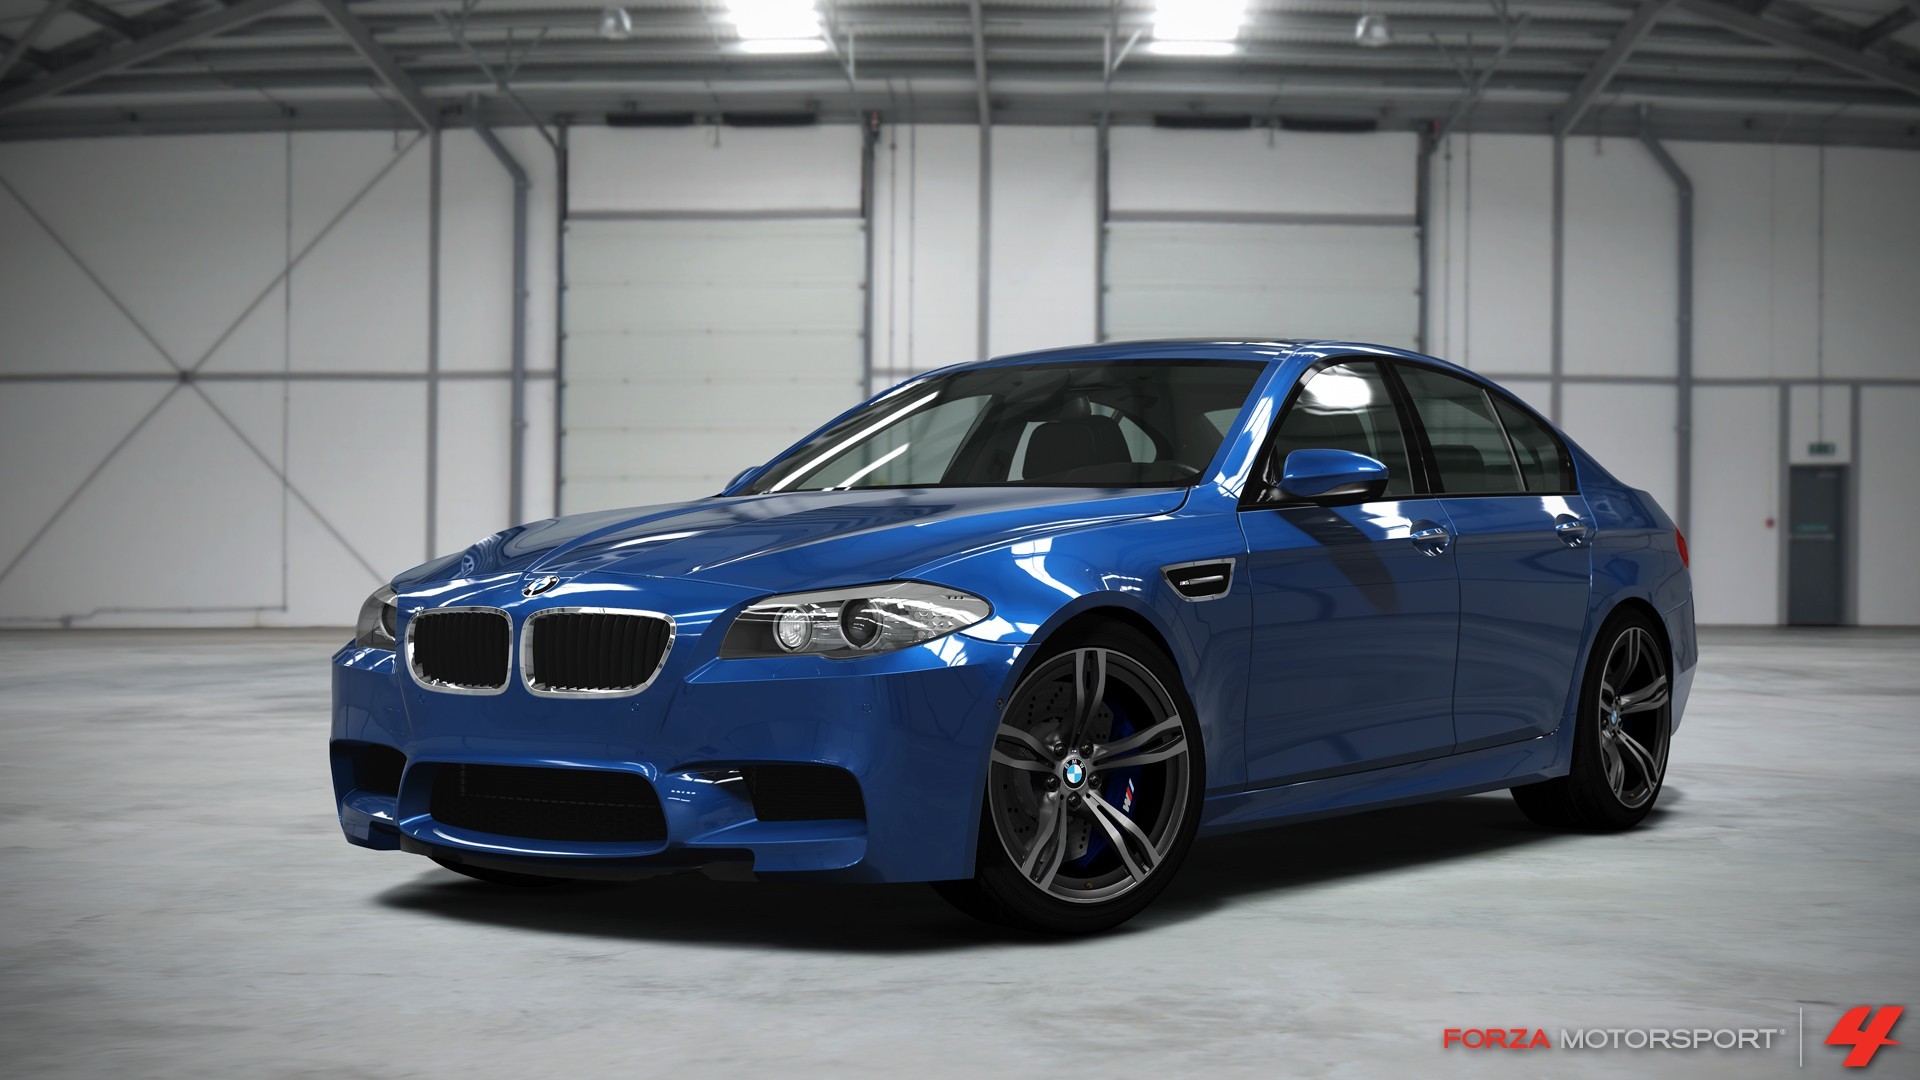 General 1920x1080 BMW M5 car BMW blue cars BMW 5 Series BMW F10 vehicle Forza Motorsport 4 video games